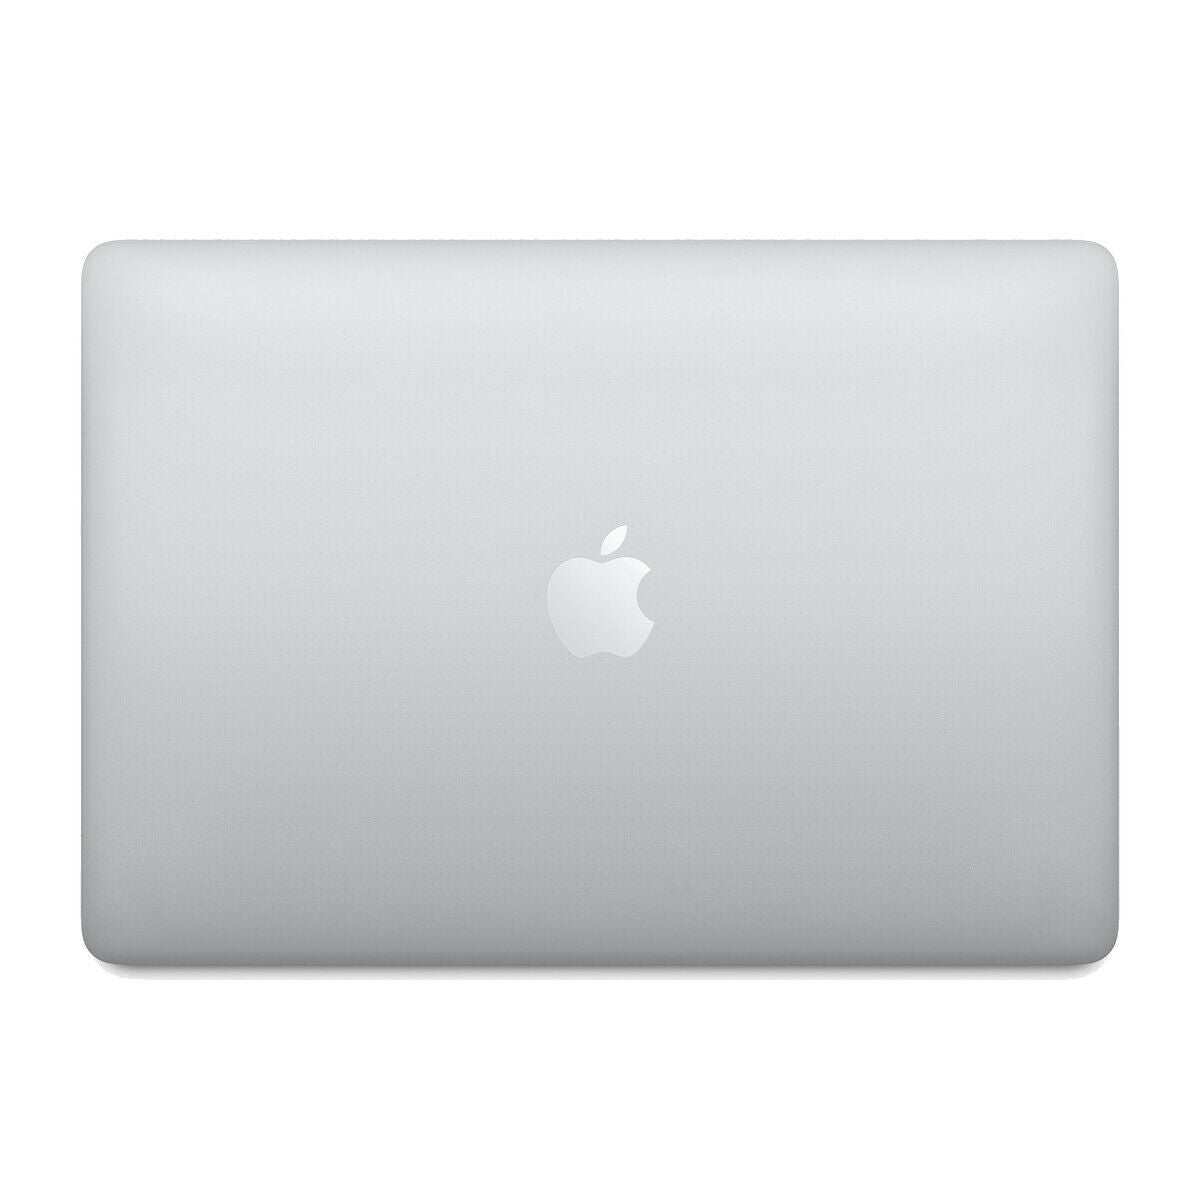 2020 Apple MacBook Pro with 2.0GHz Intel Core i5 (13-inch, 16GB RAM, 512GB  SSD Storage) - Space Gray (Renewed)